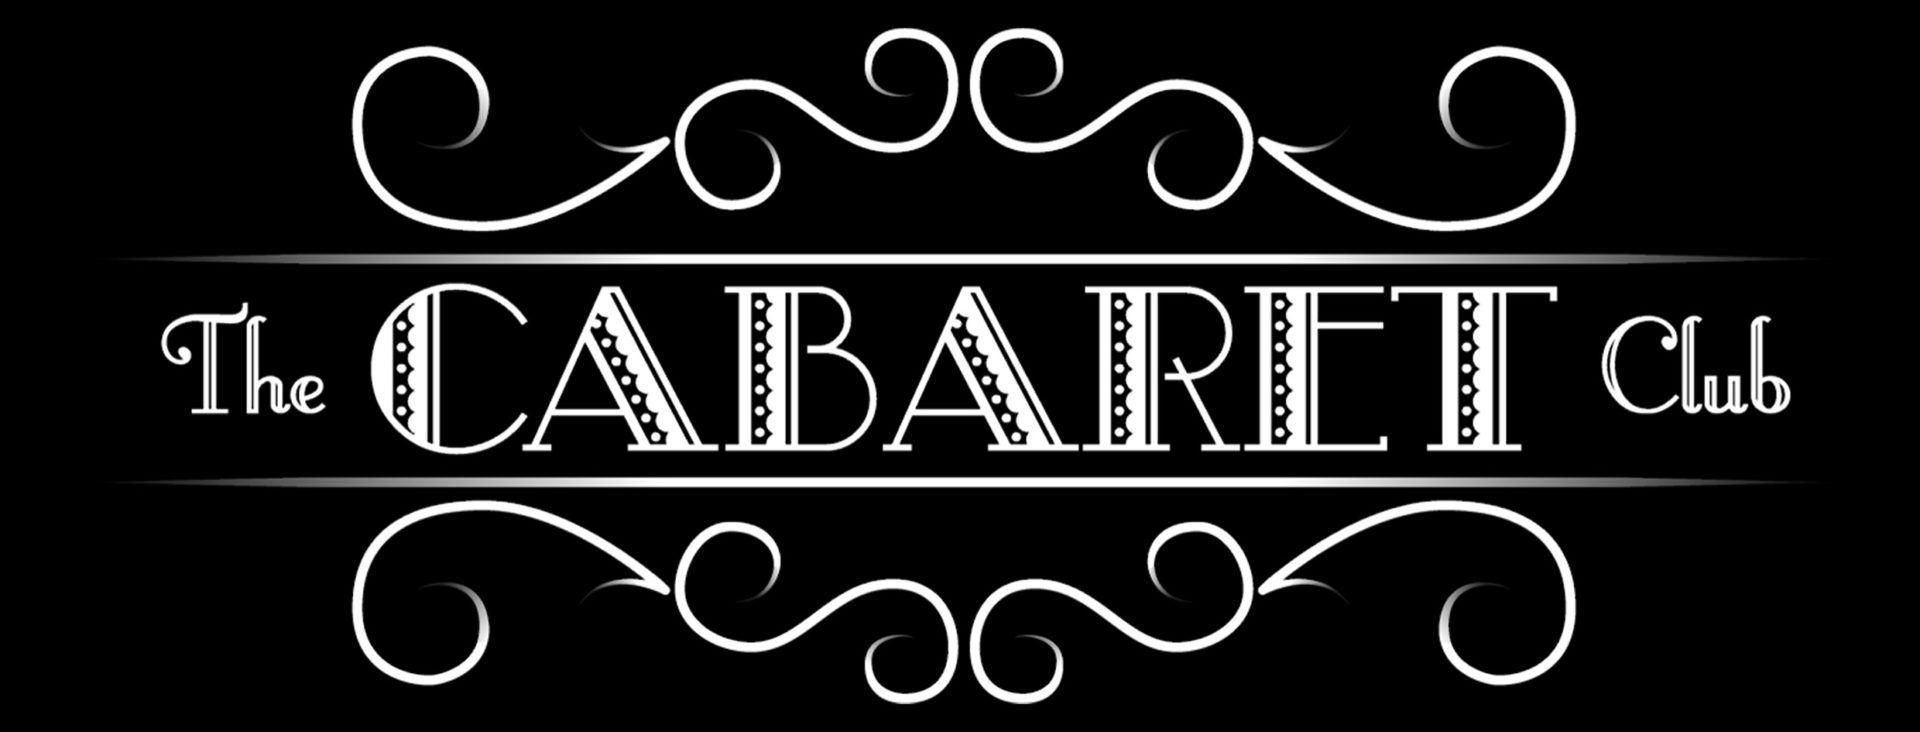 Cabaret Logo - Cabaret Club Logo - Gold Rush Mini Golf